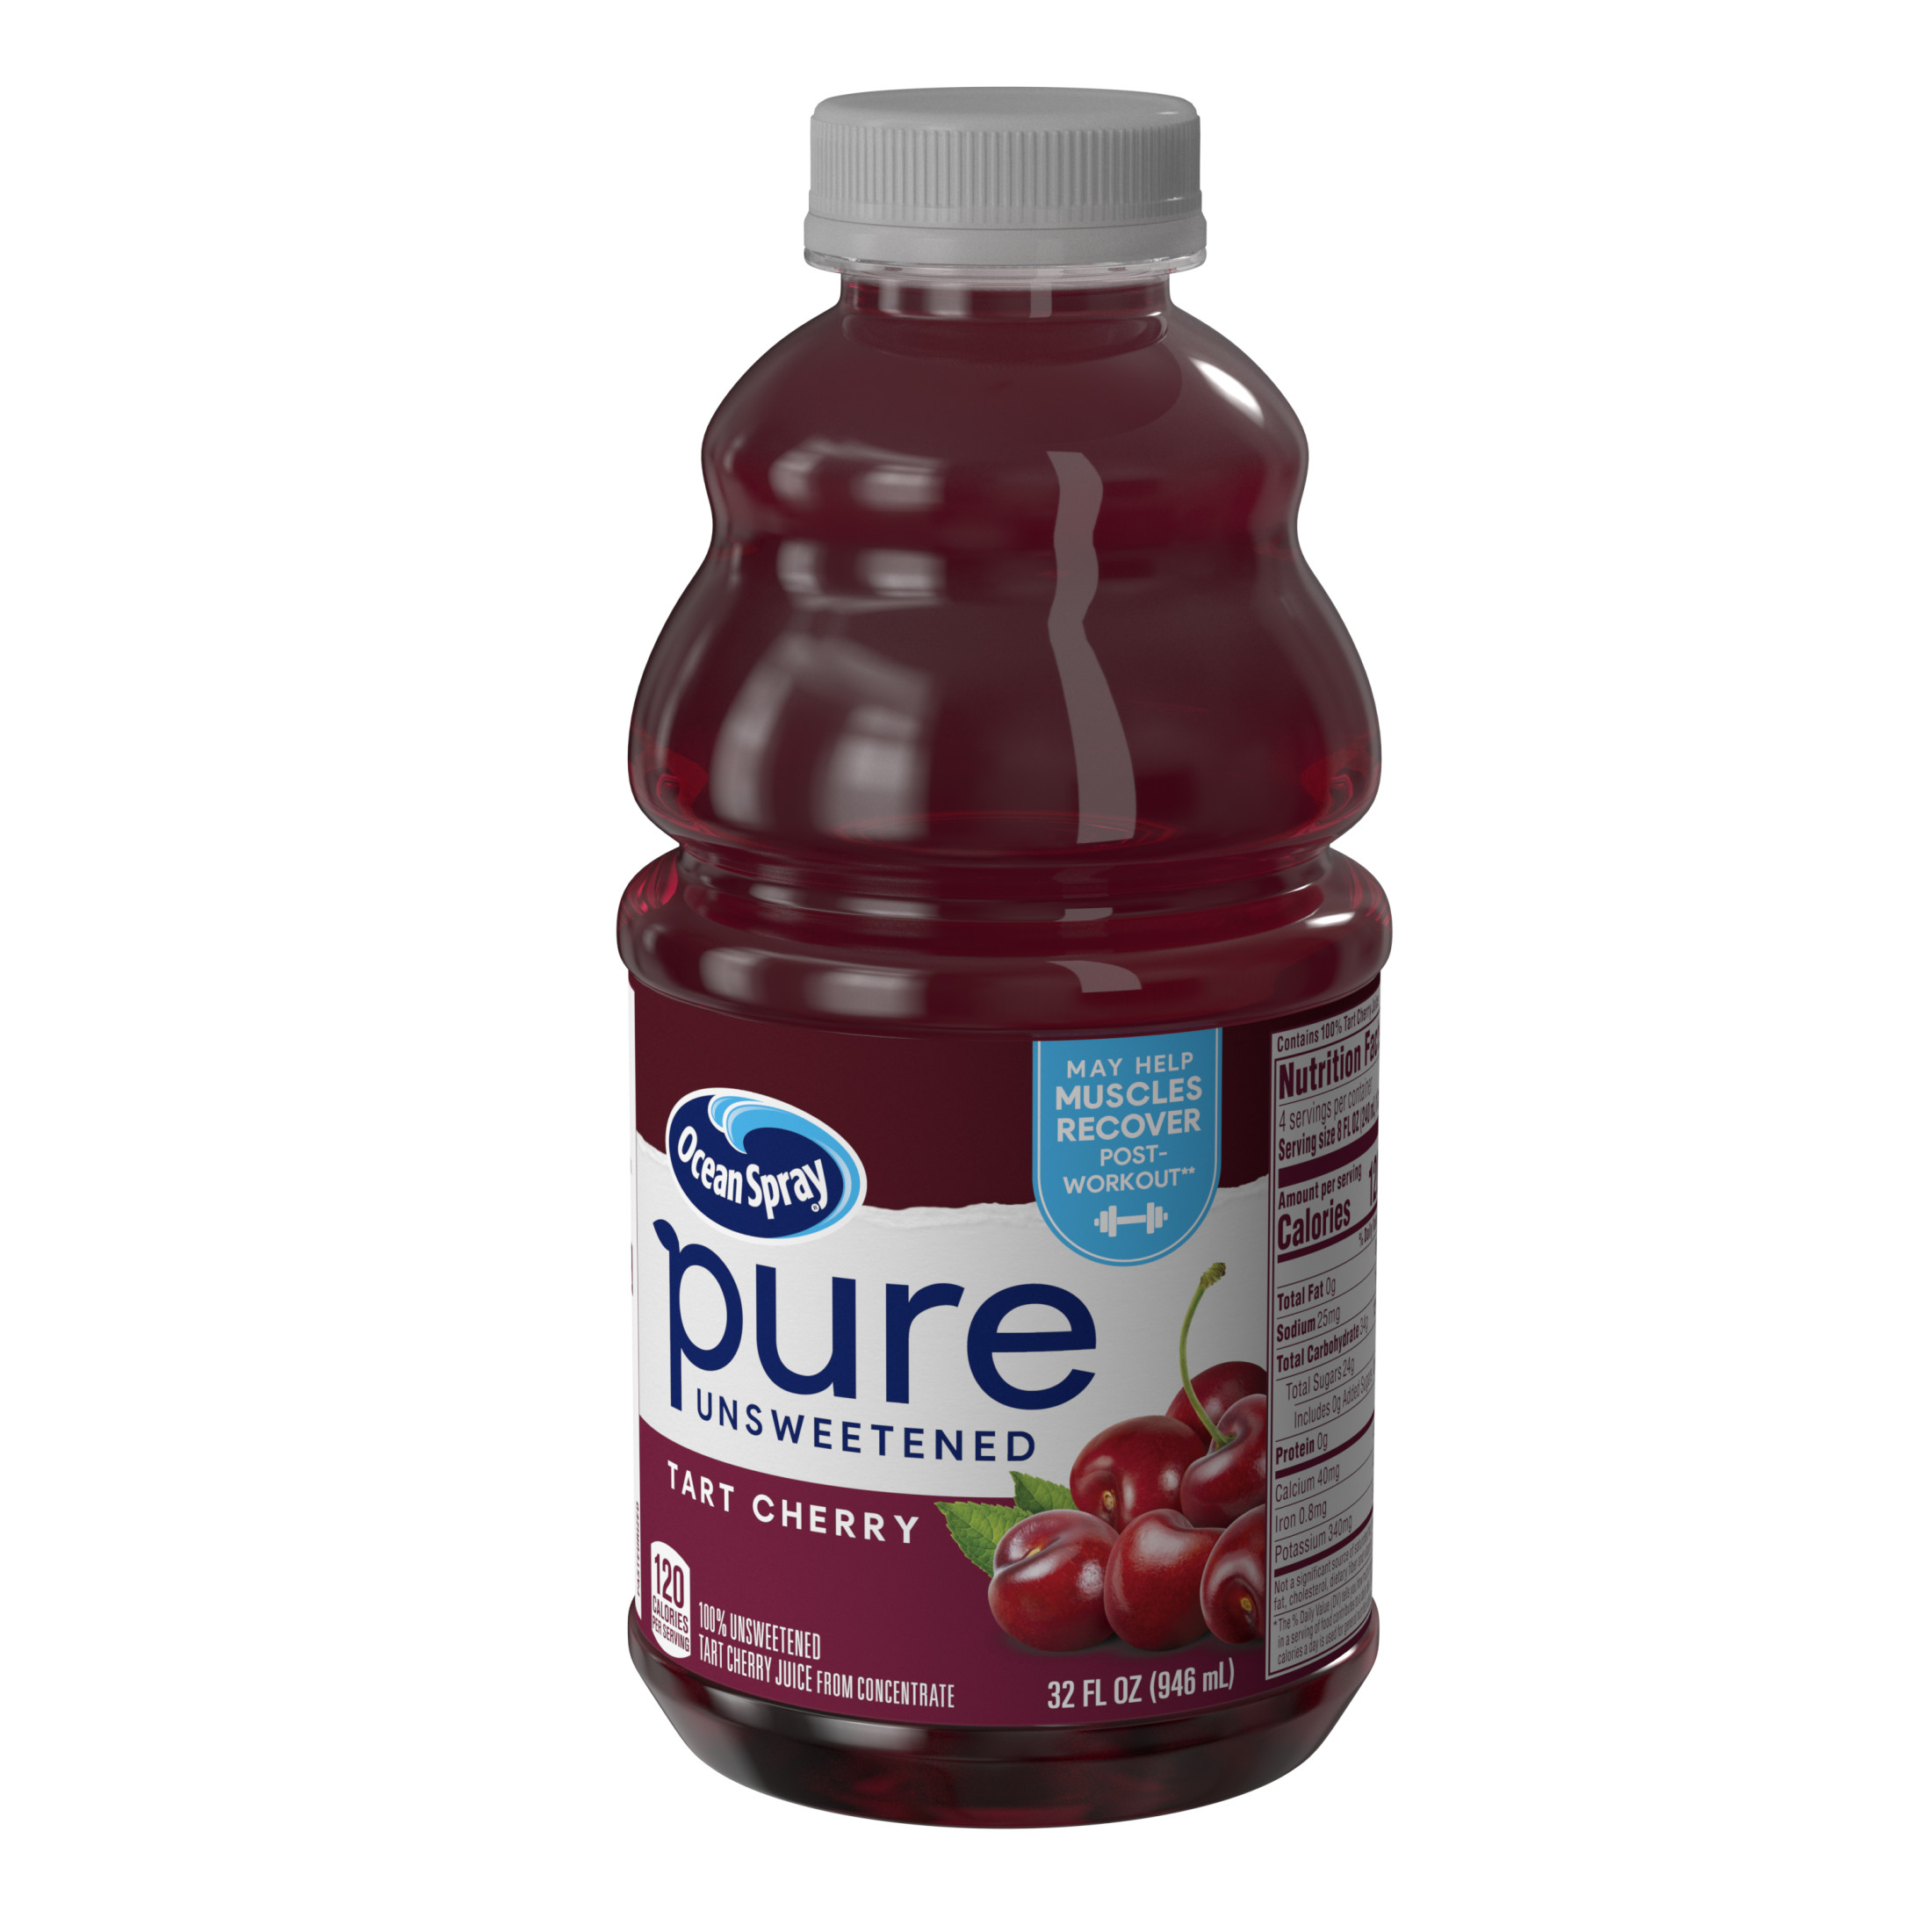 Ocean Spray® Pure Unsweetened Tart Cherry, 100% Tart Cherry Juice, 32 fl oz Bottle - image 5 of 6